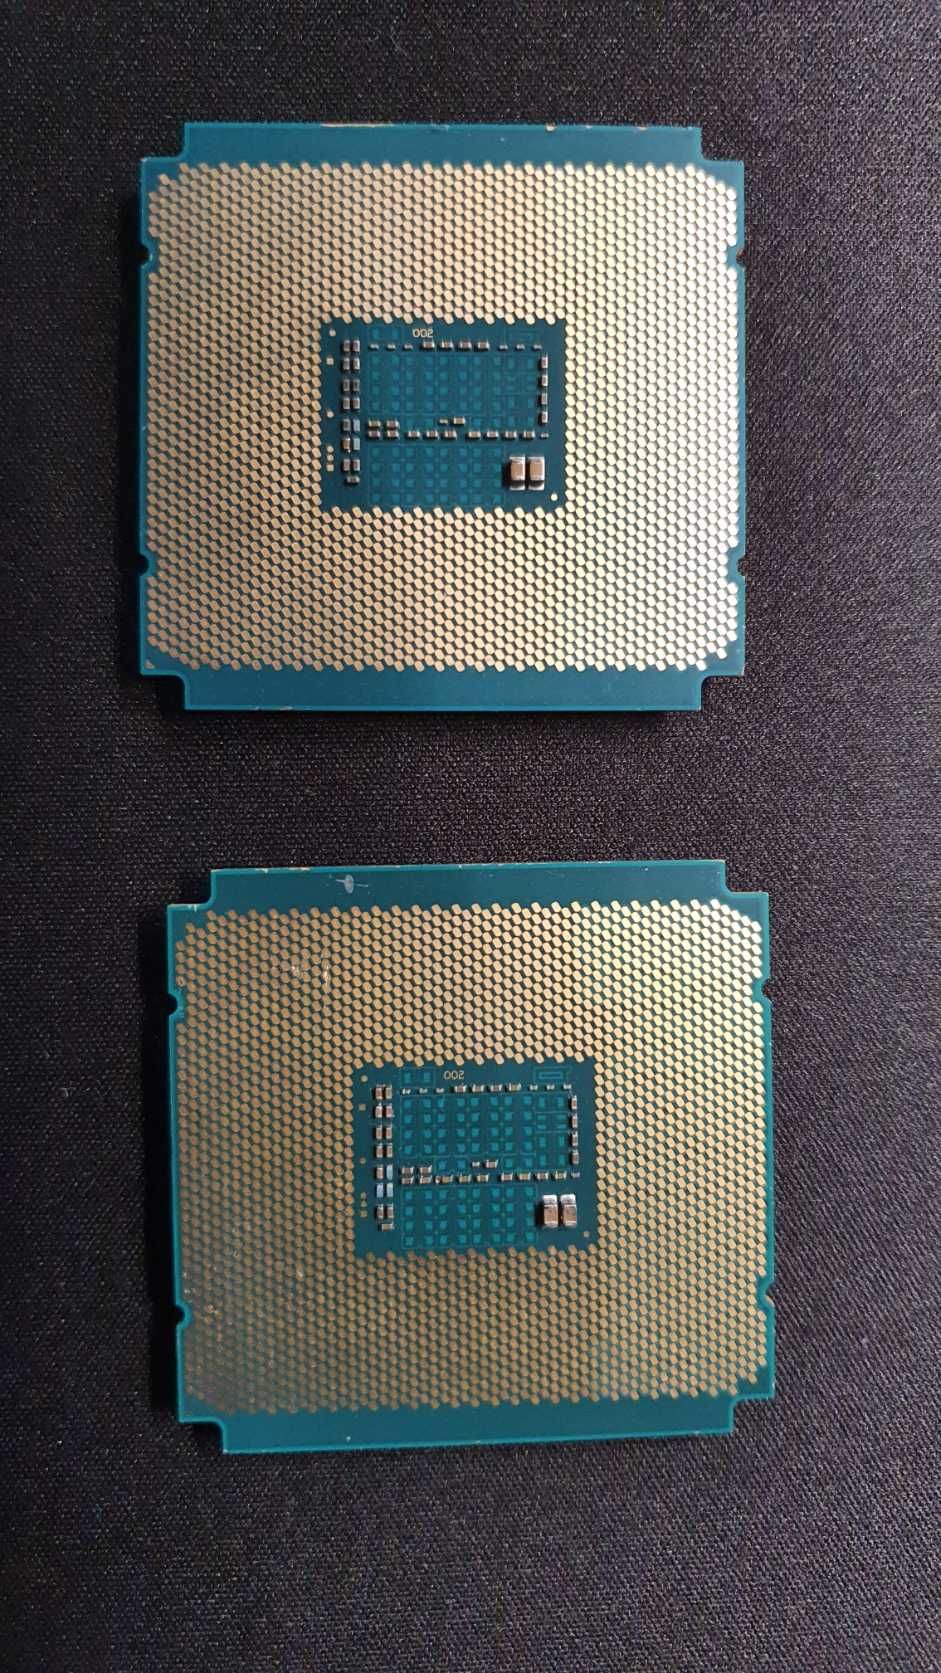 Vand procesor Intel xeon E5-2683 v3